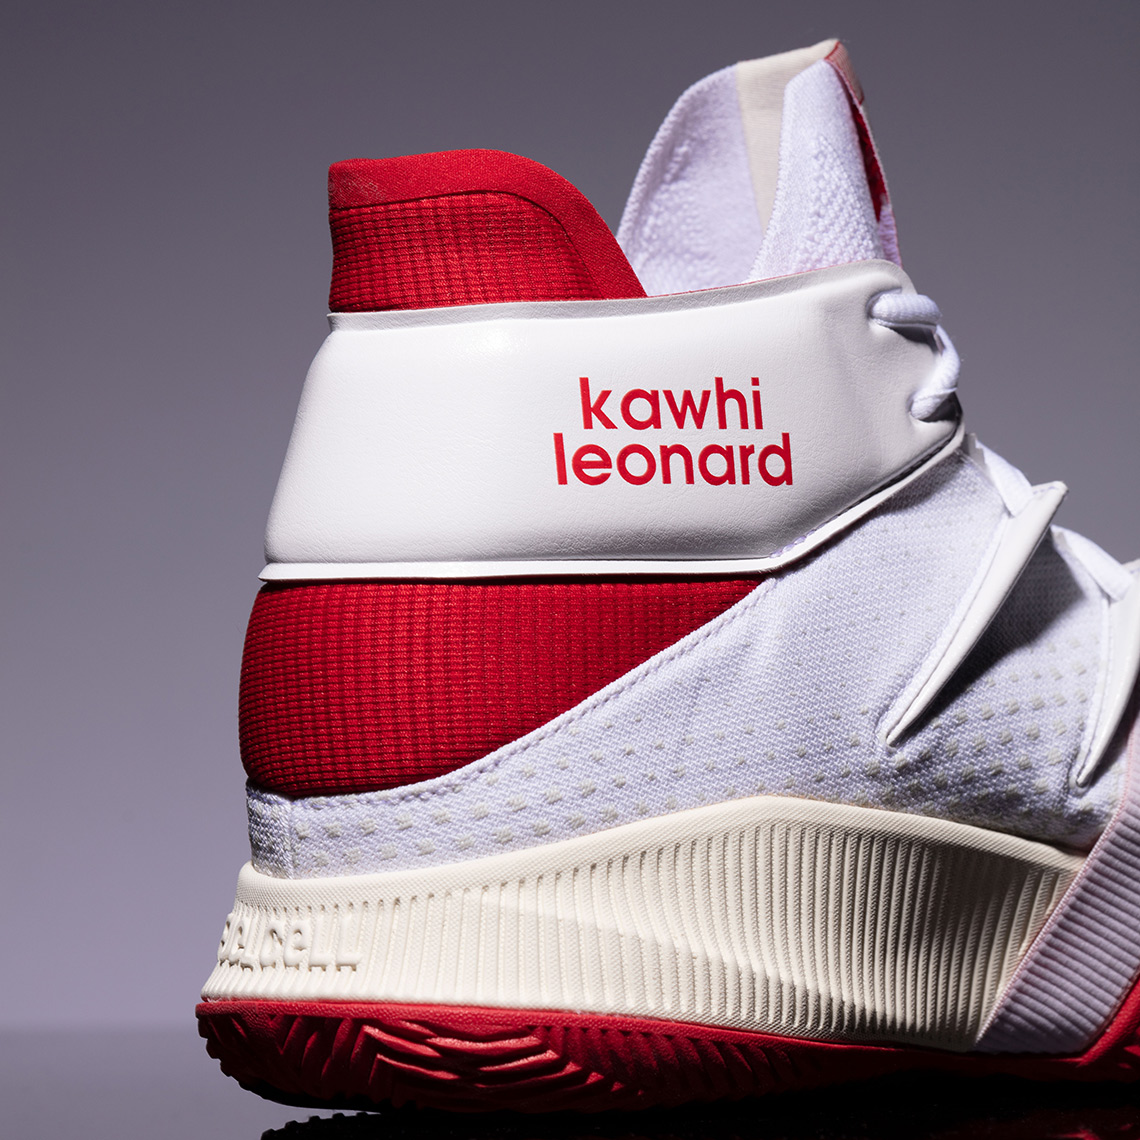 kawhi leonard basketball sneakers